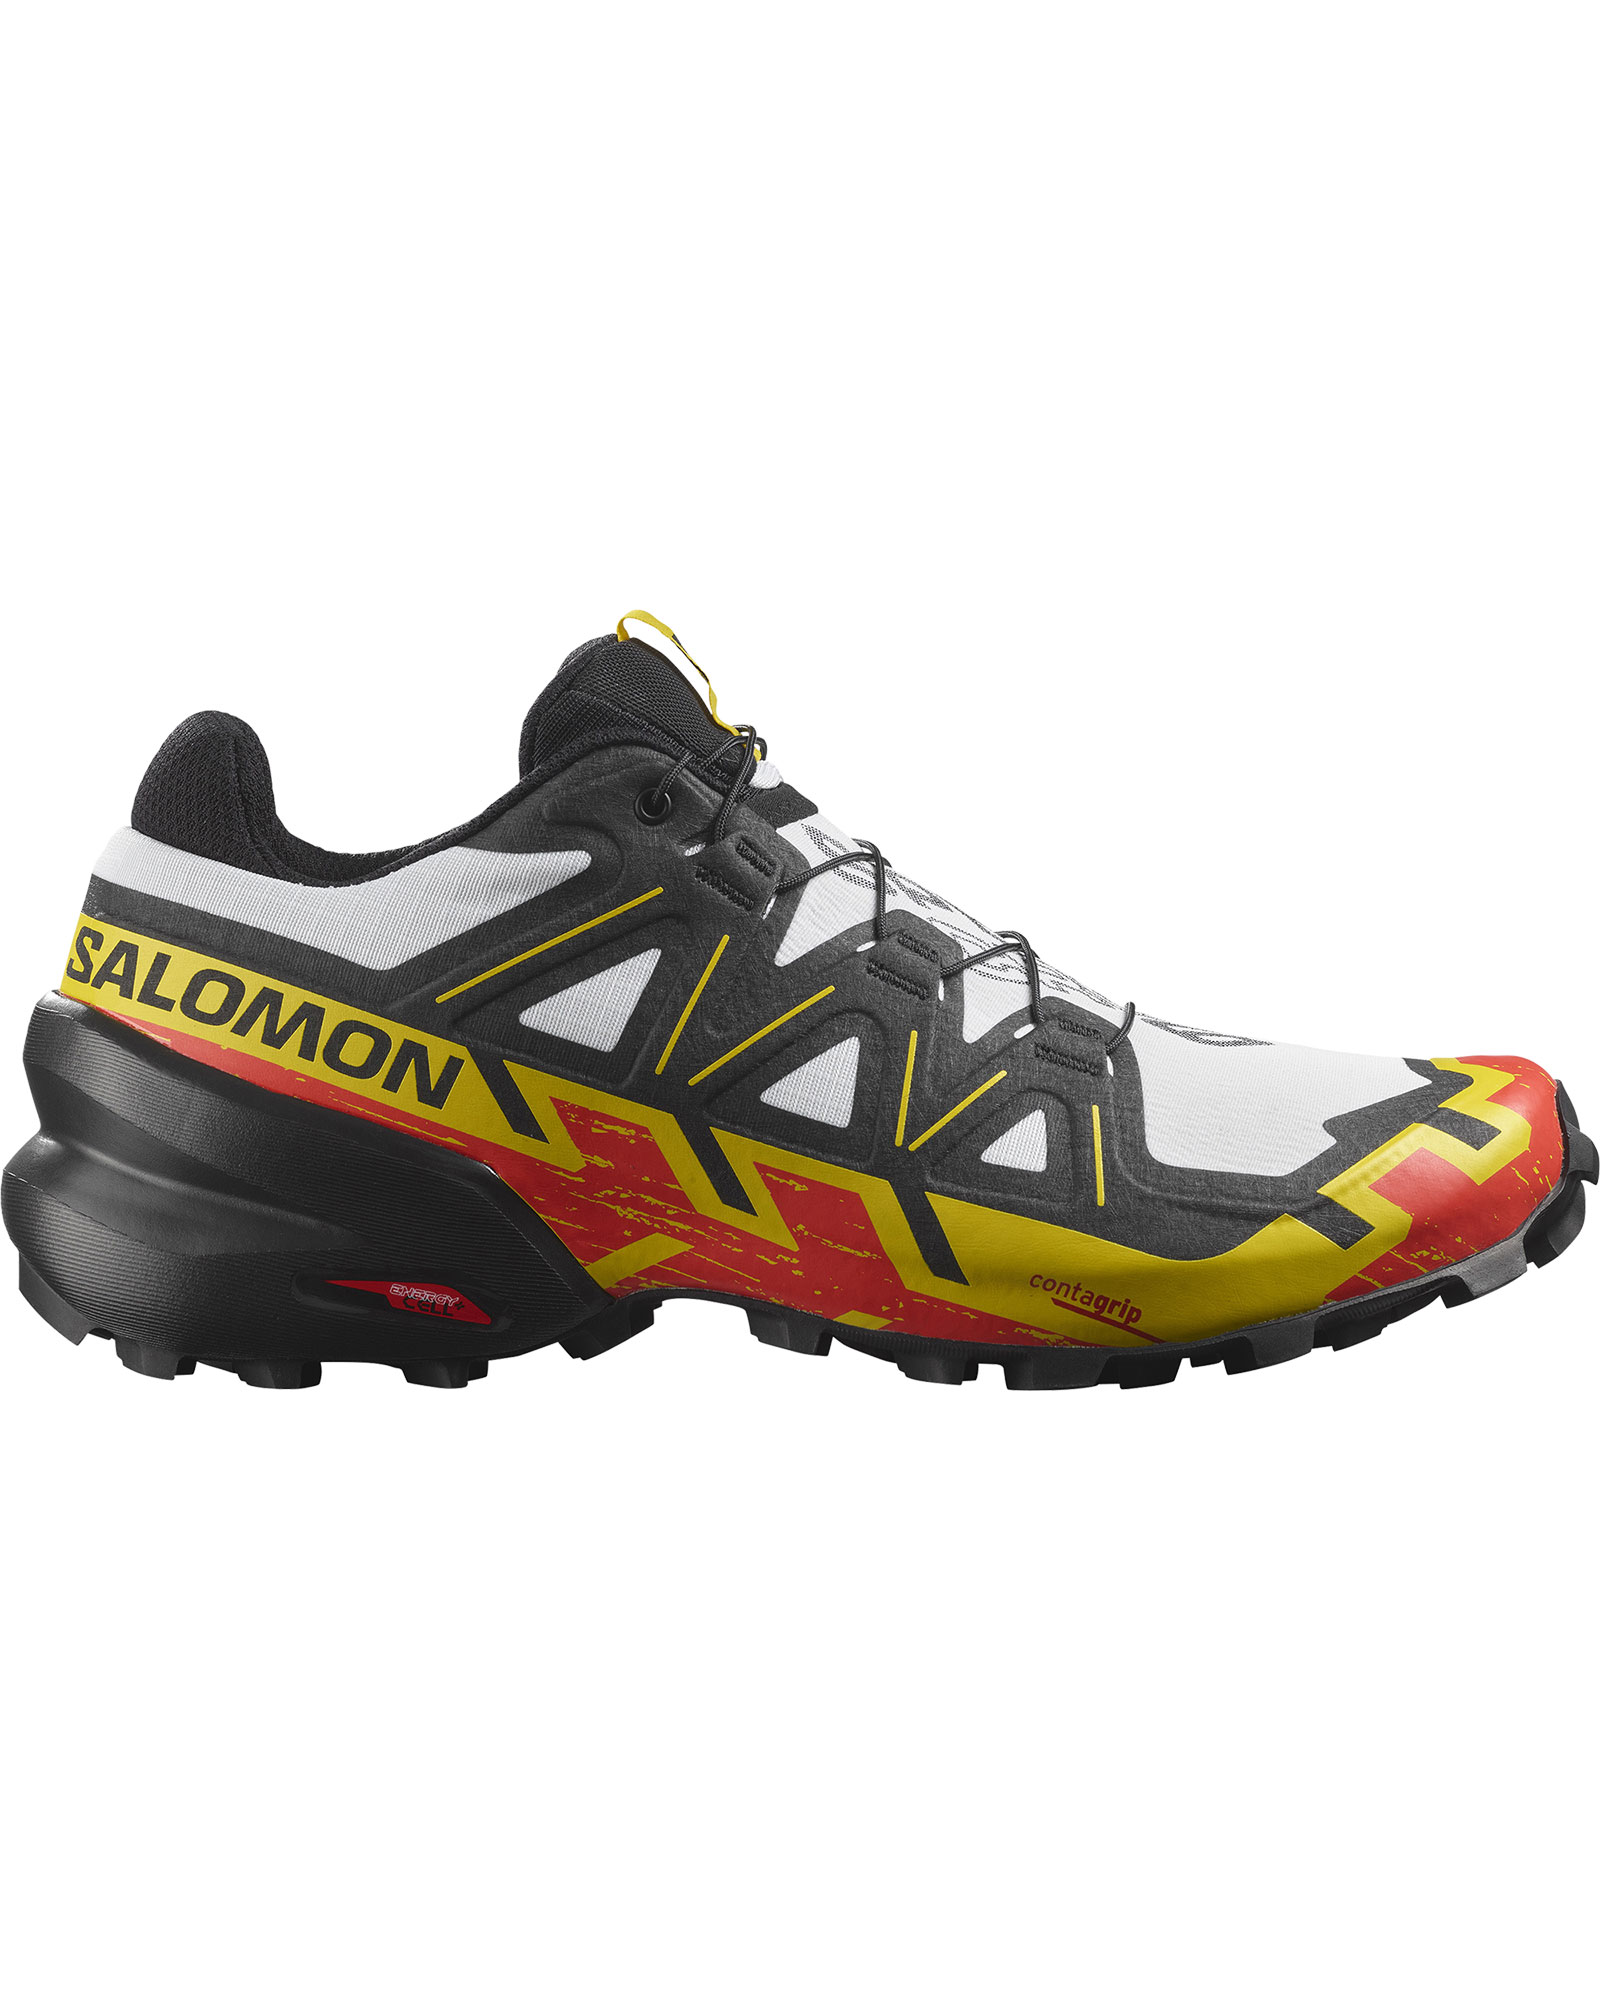 Salomon Speedcross 6 Men’s Shoes - White/Black/Empire Yellow UK 7